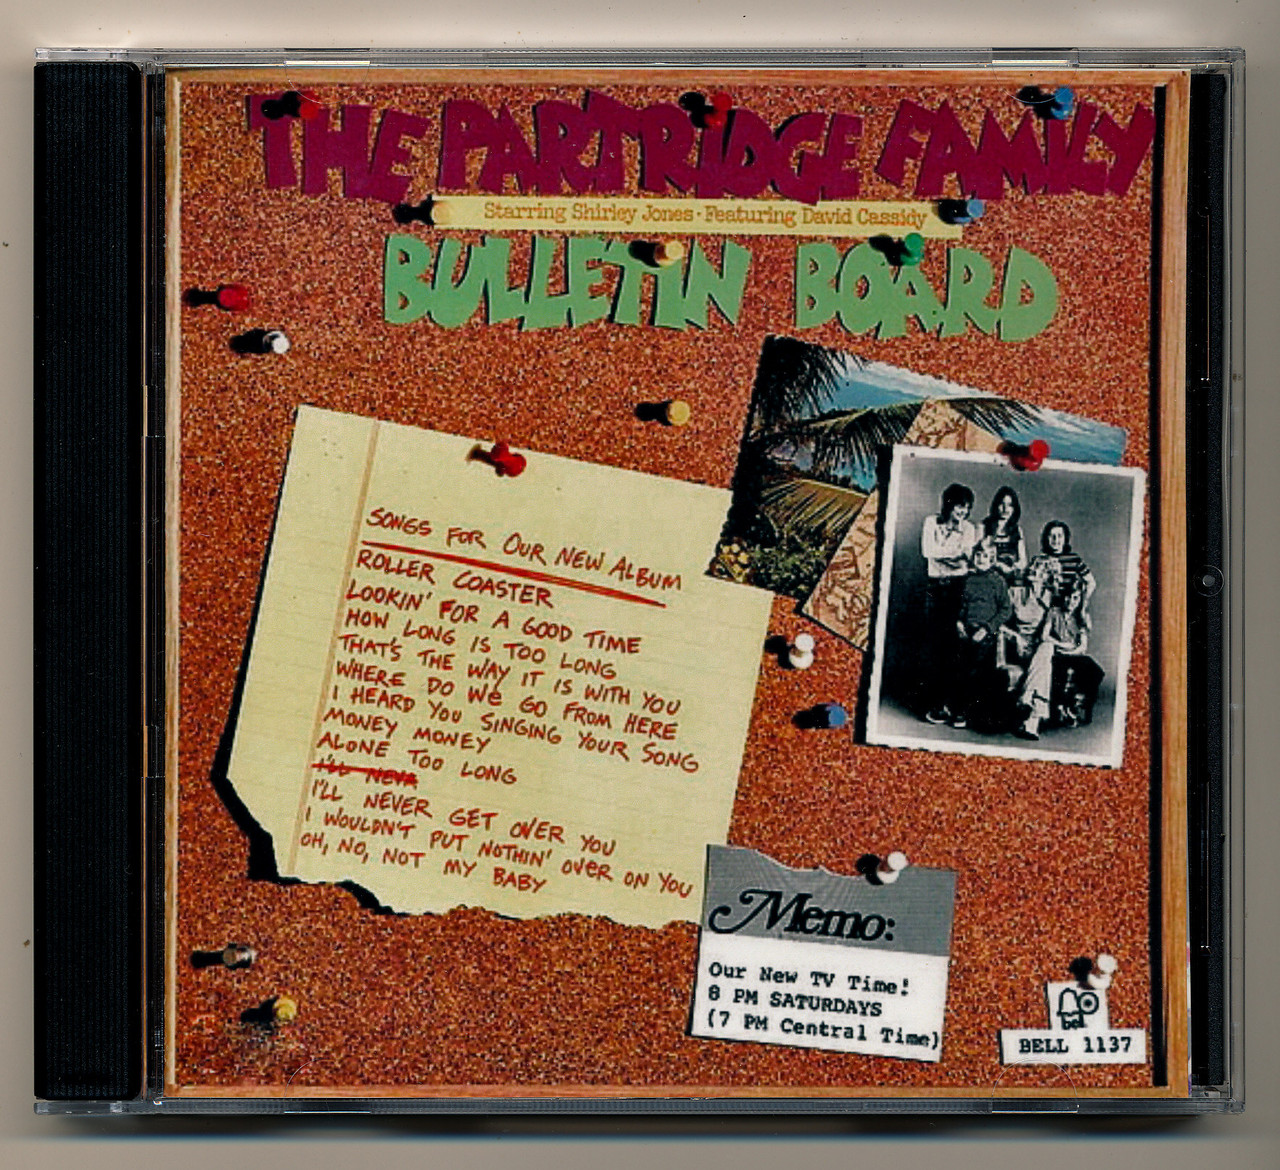 The Partridge Family - 4 LP LOT Christmas Card, Album, Sound